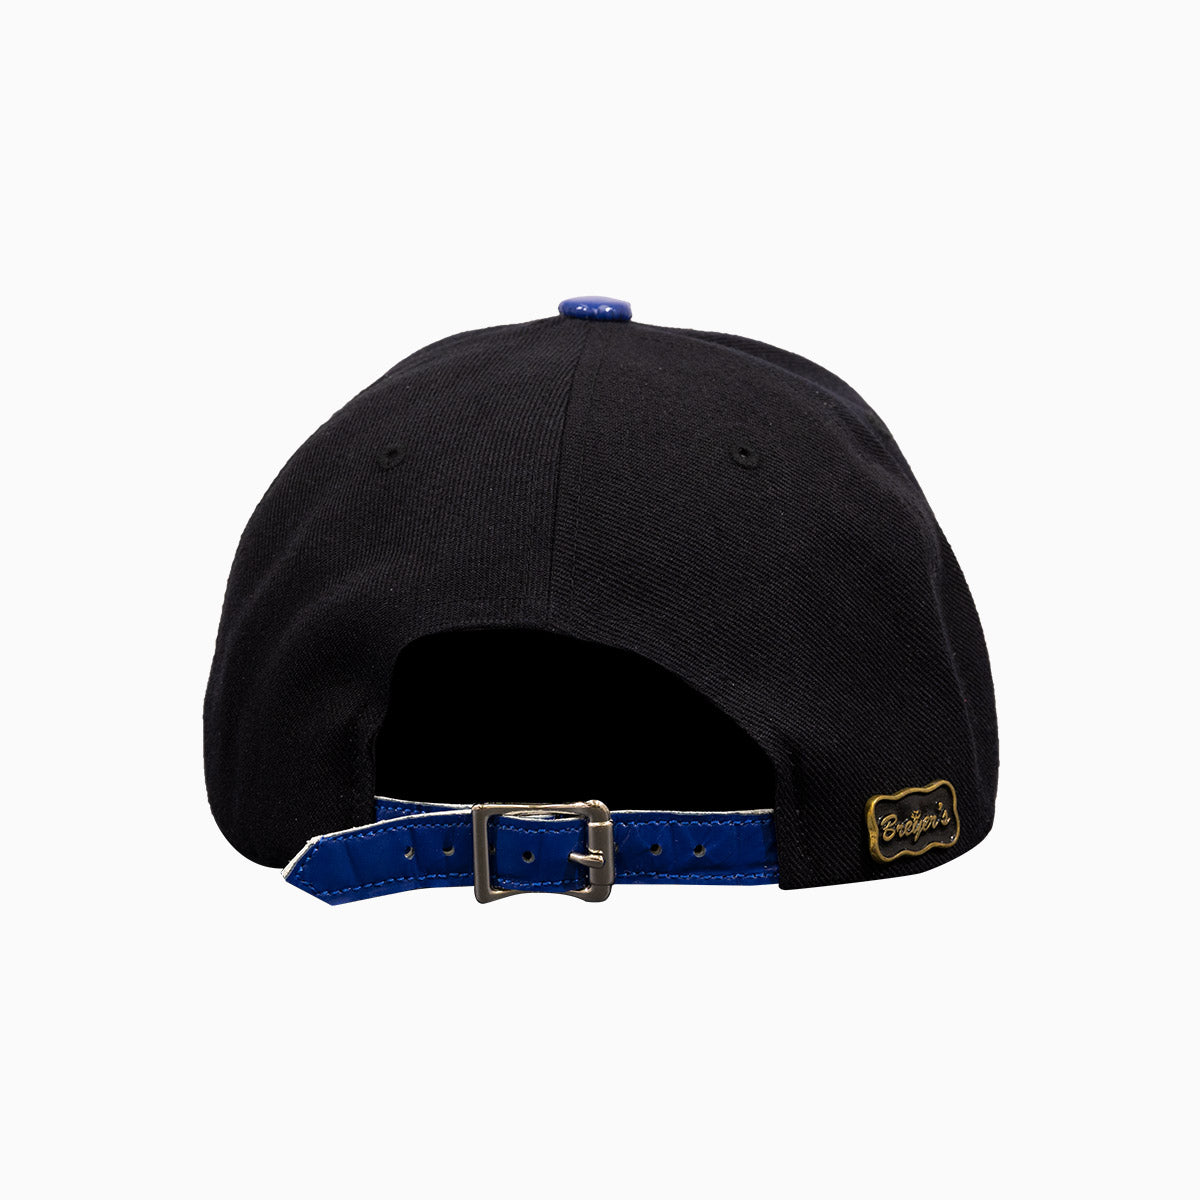 breyers-buck-50-wool-hat-with-leather-visor-breyers-lwh-black-navy